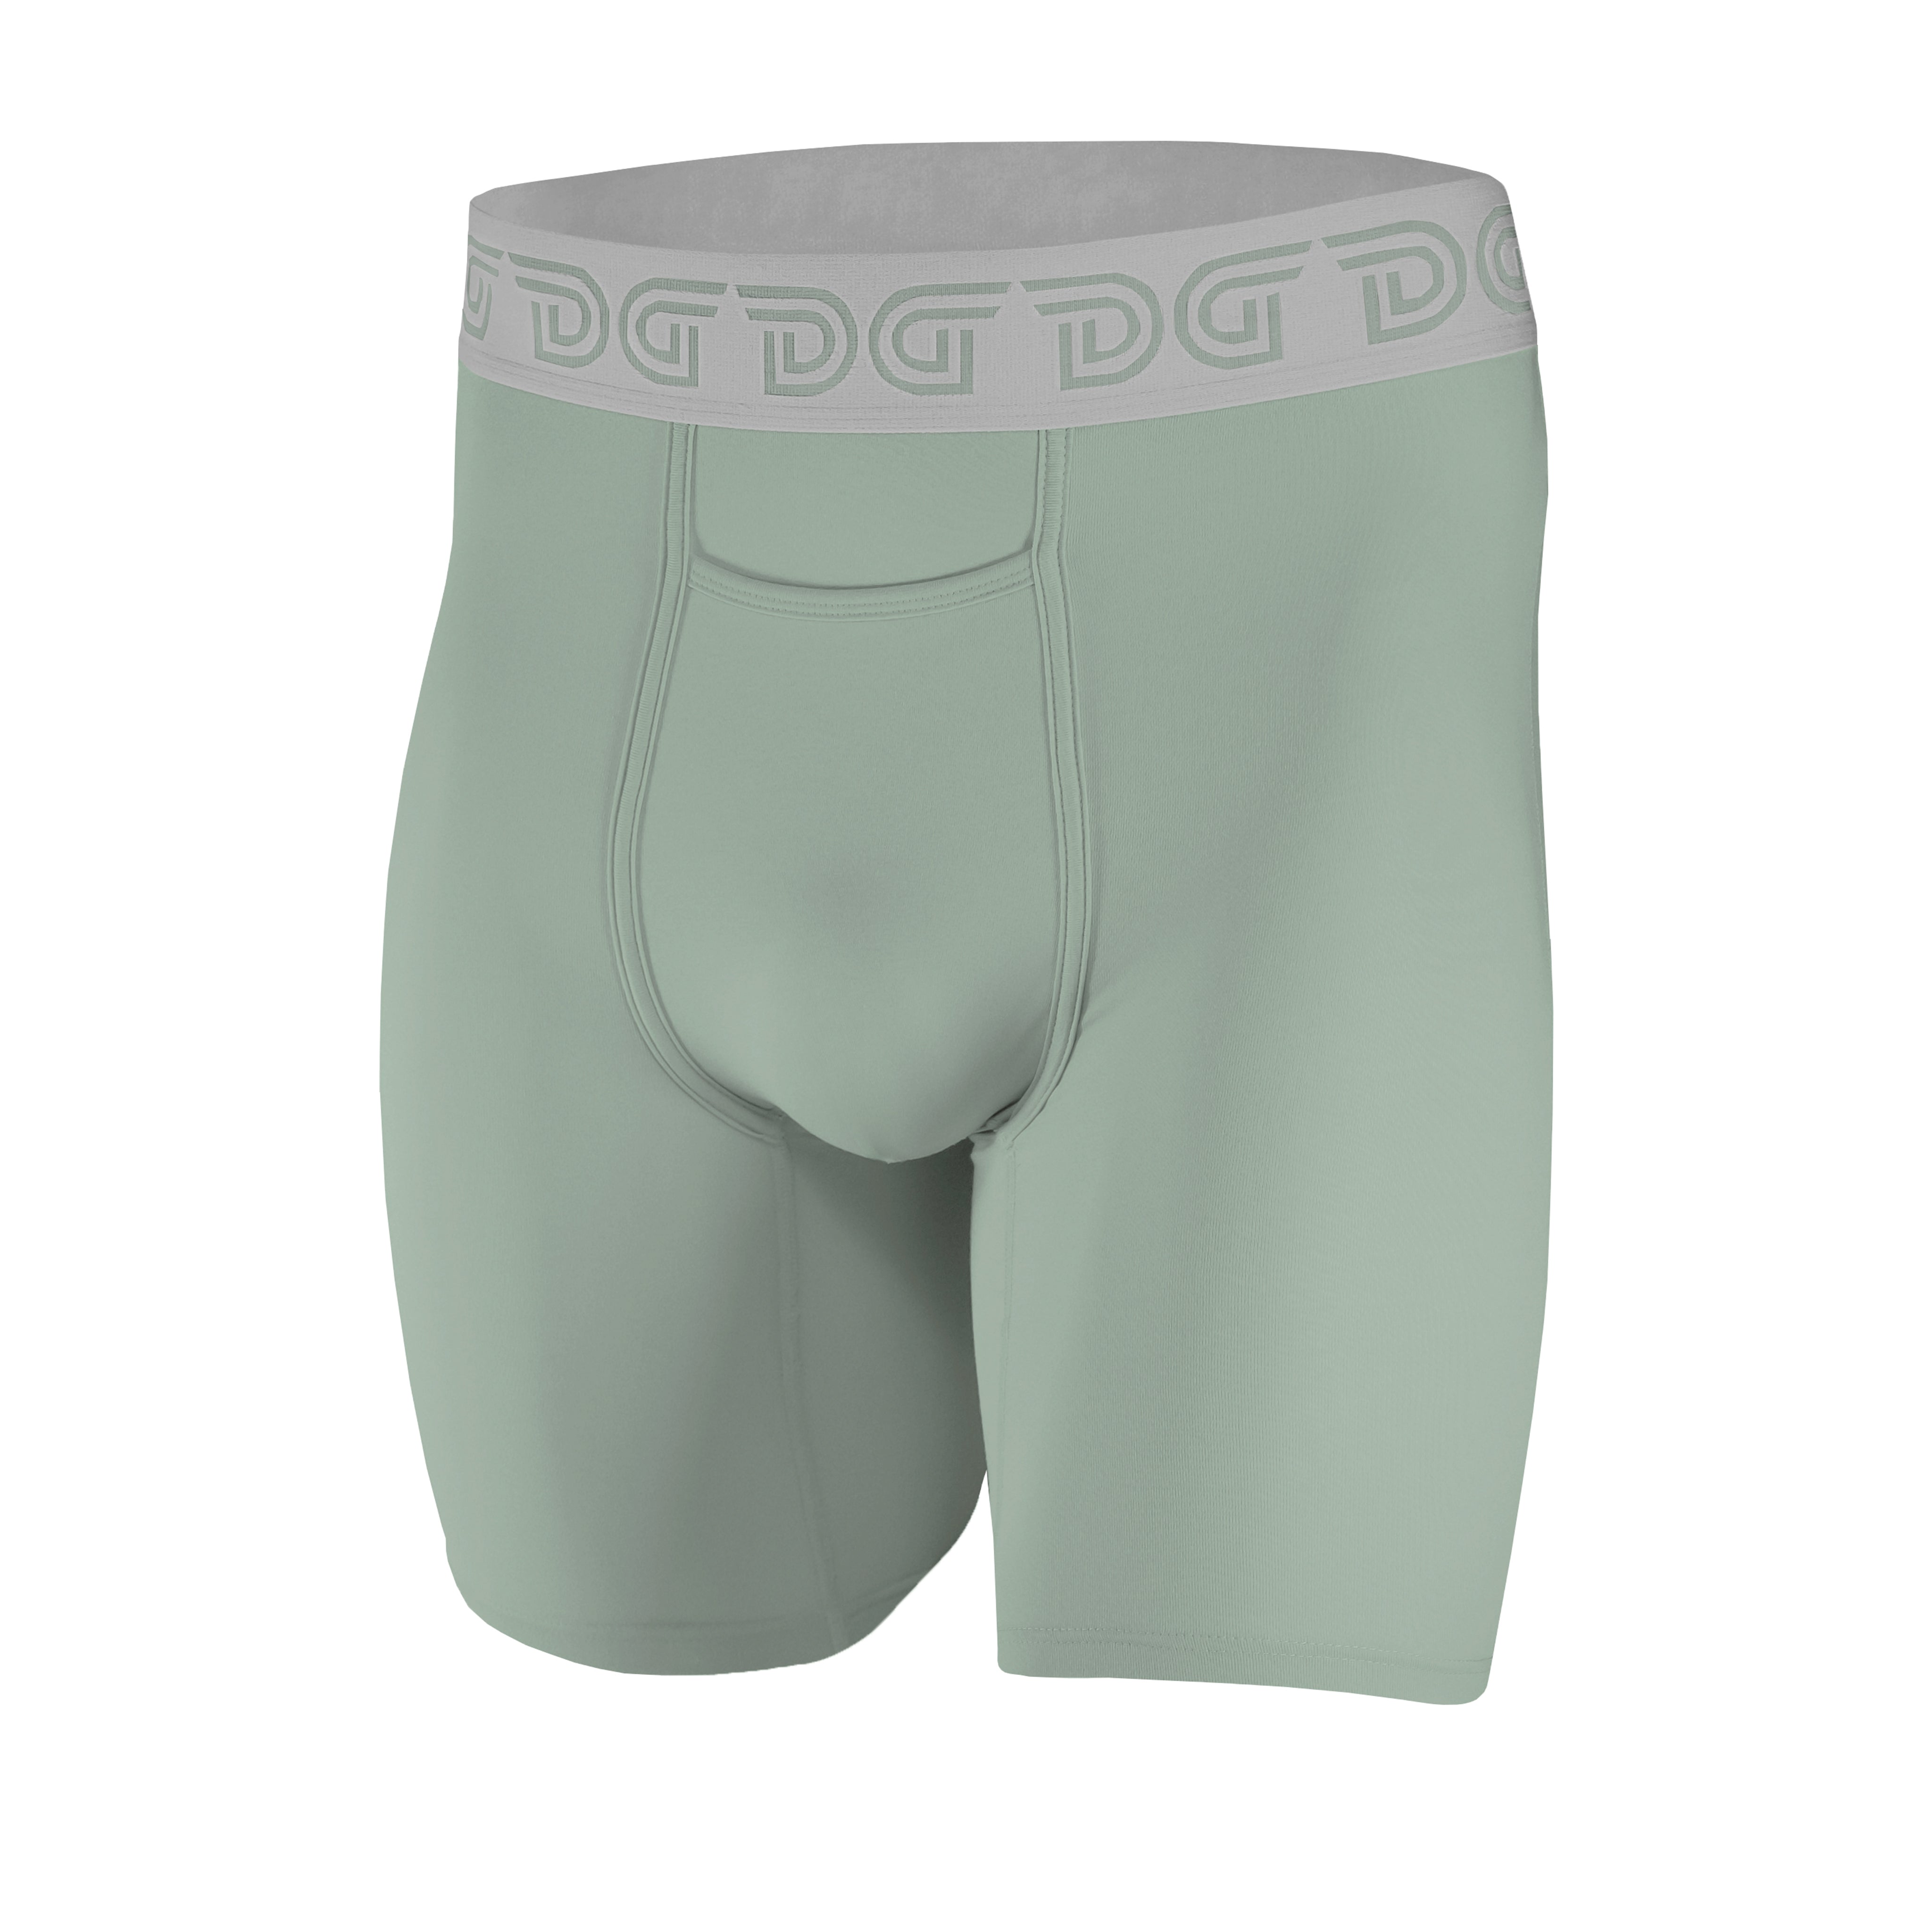 Men's Underwear Suppliers 22205503 - Wholesale Manufacturers and